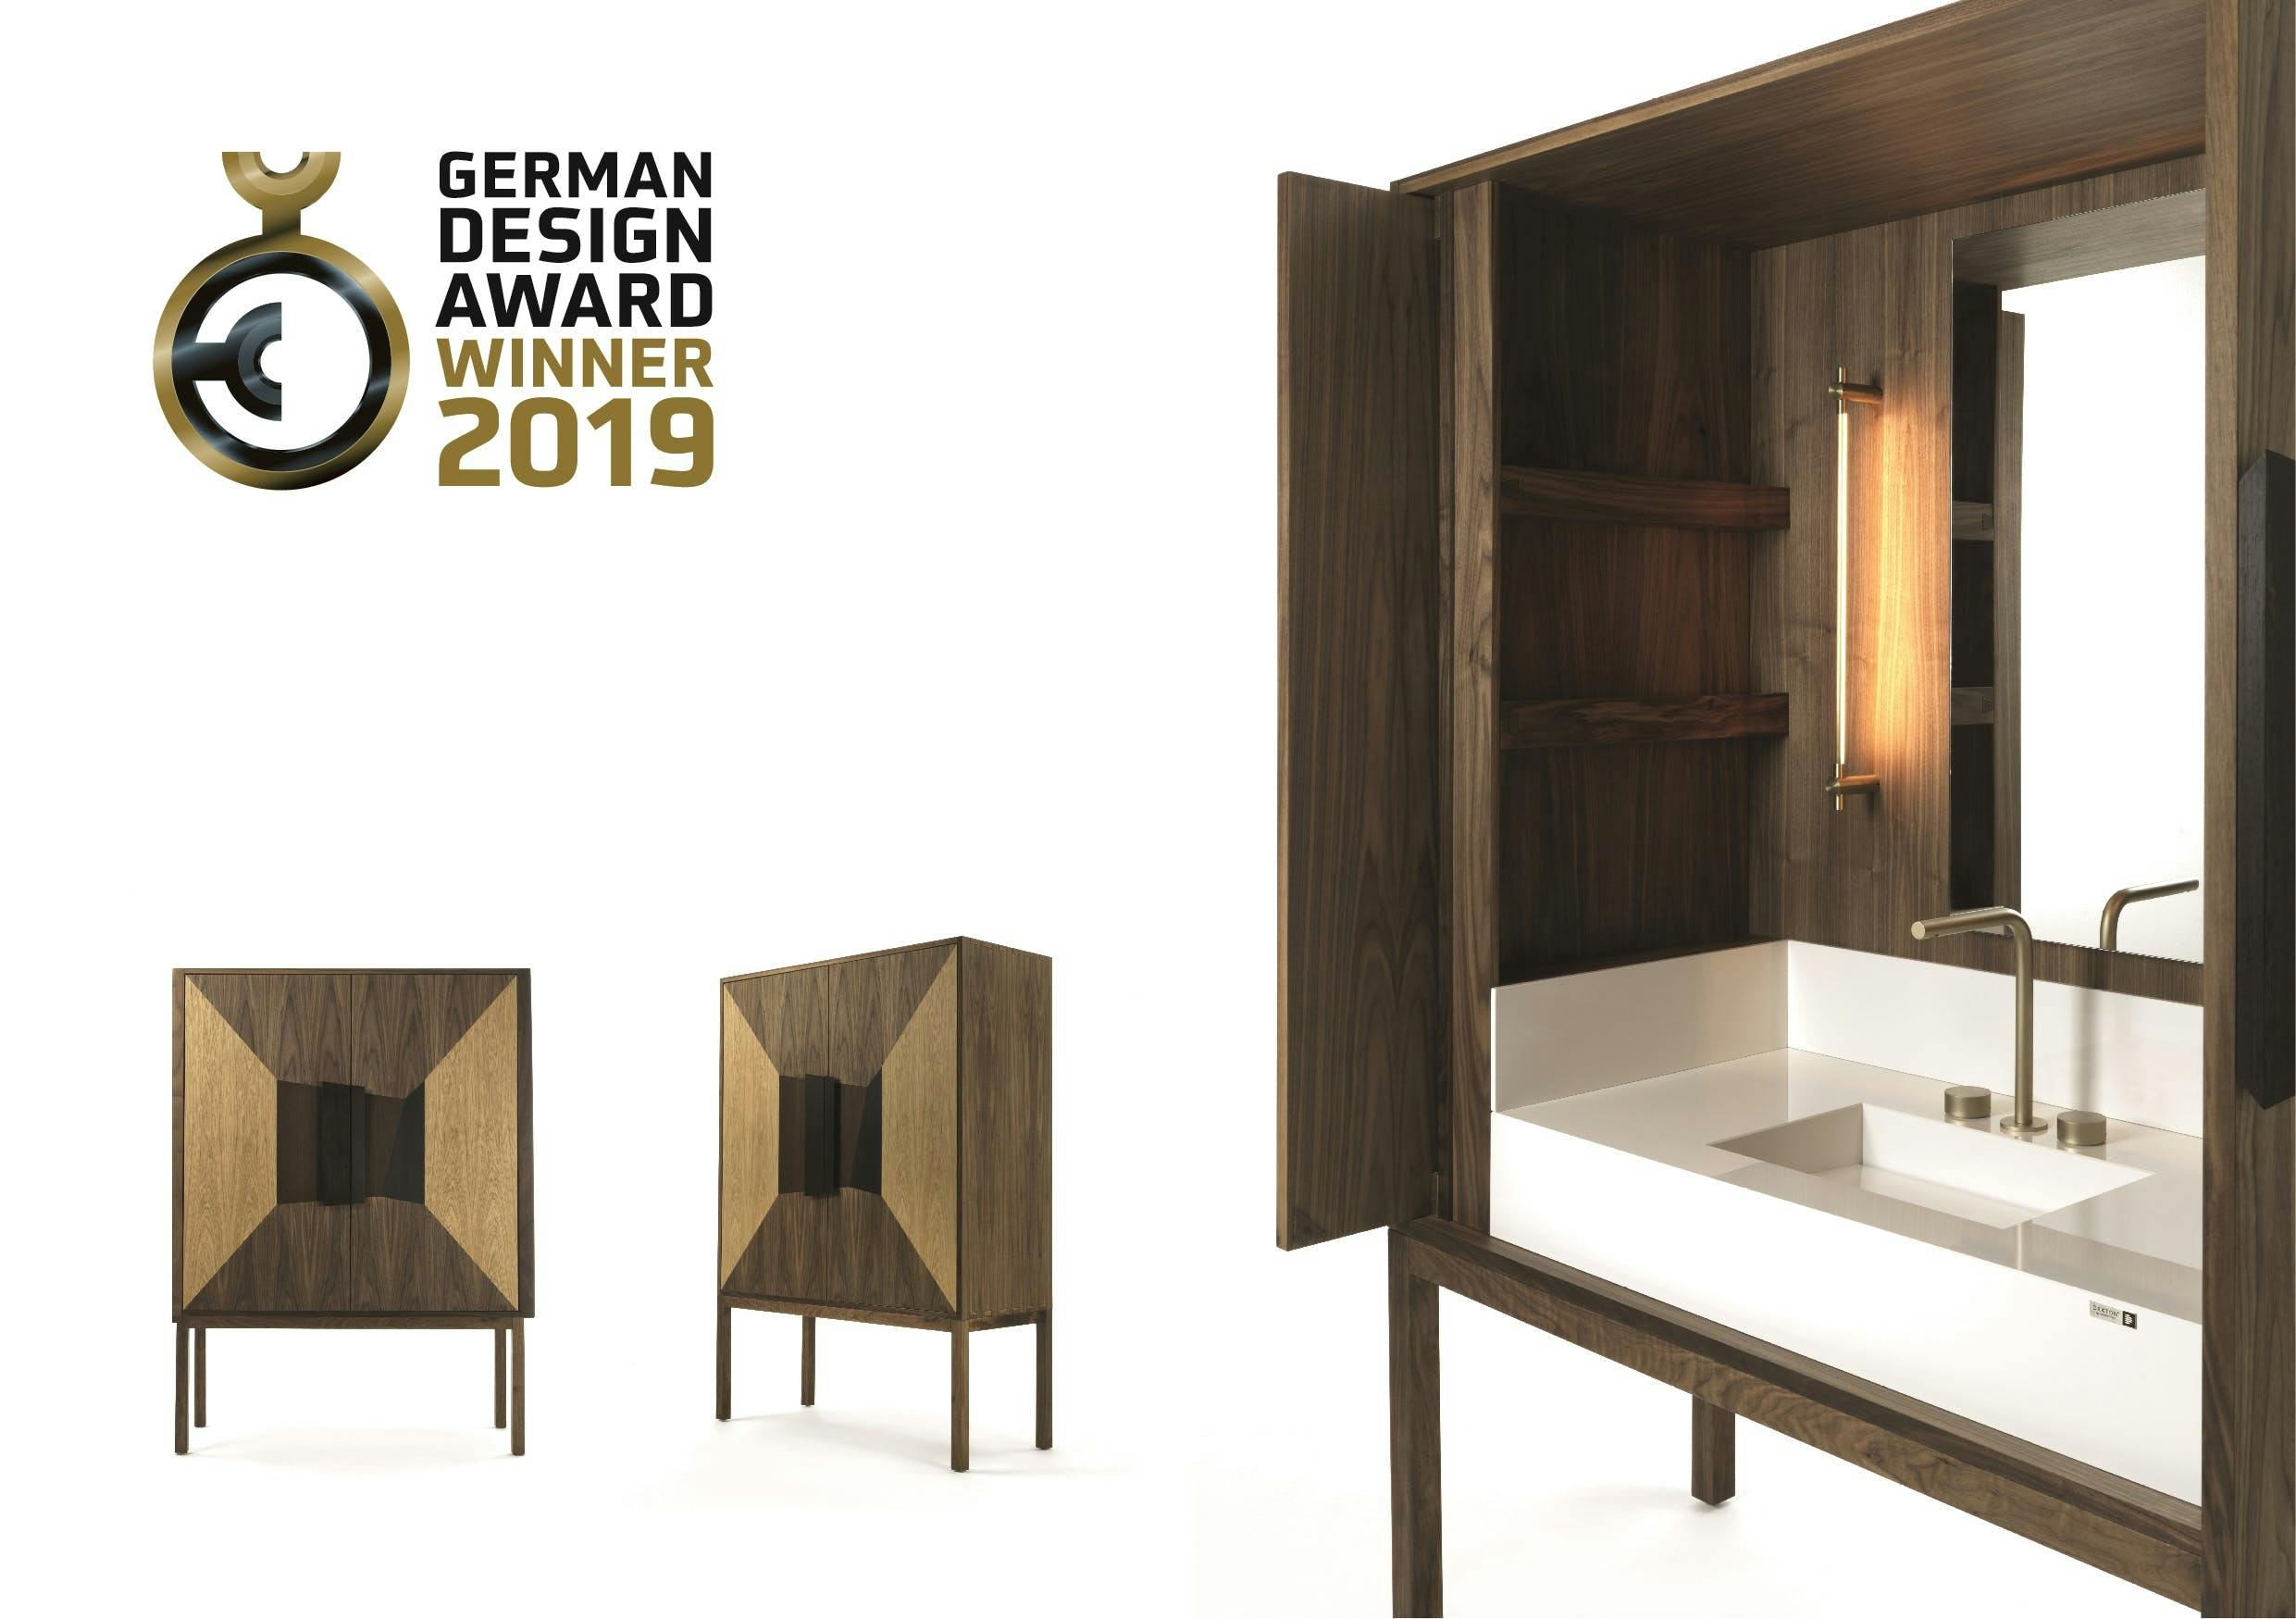 Image 31 of Dekauri German Design Award 2019 1 in DeKauri, German Design Award 2019 - Cosentino